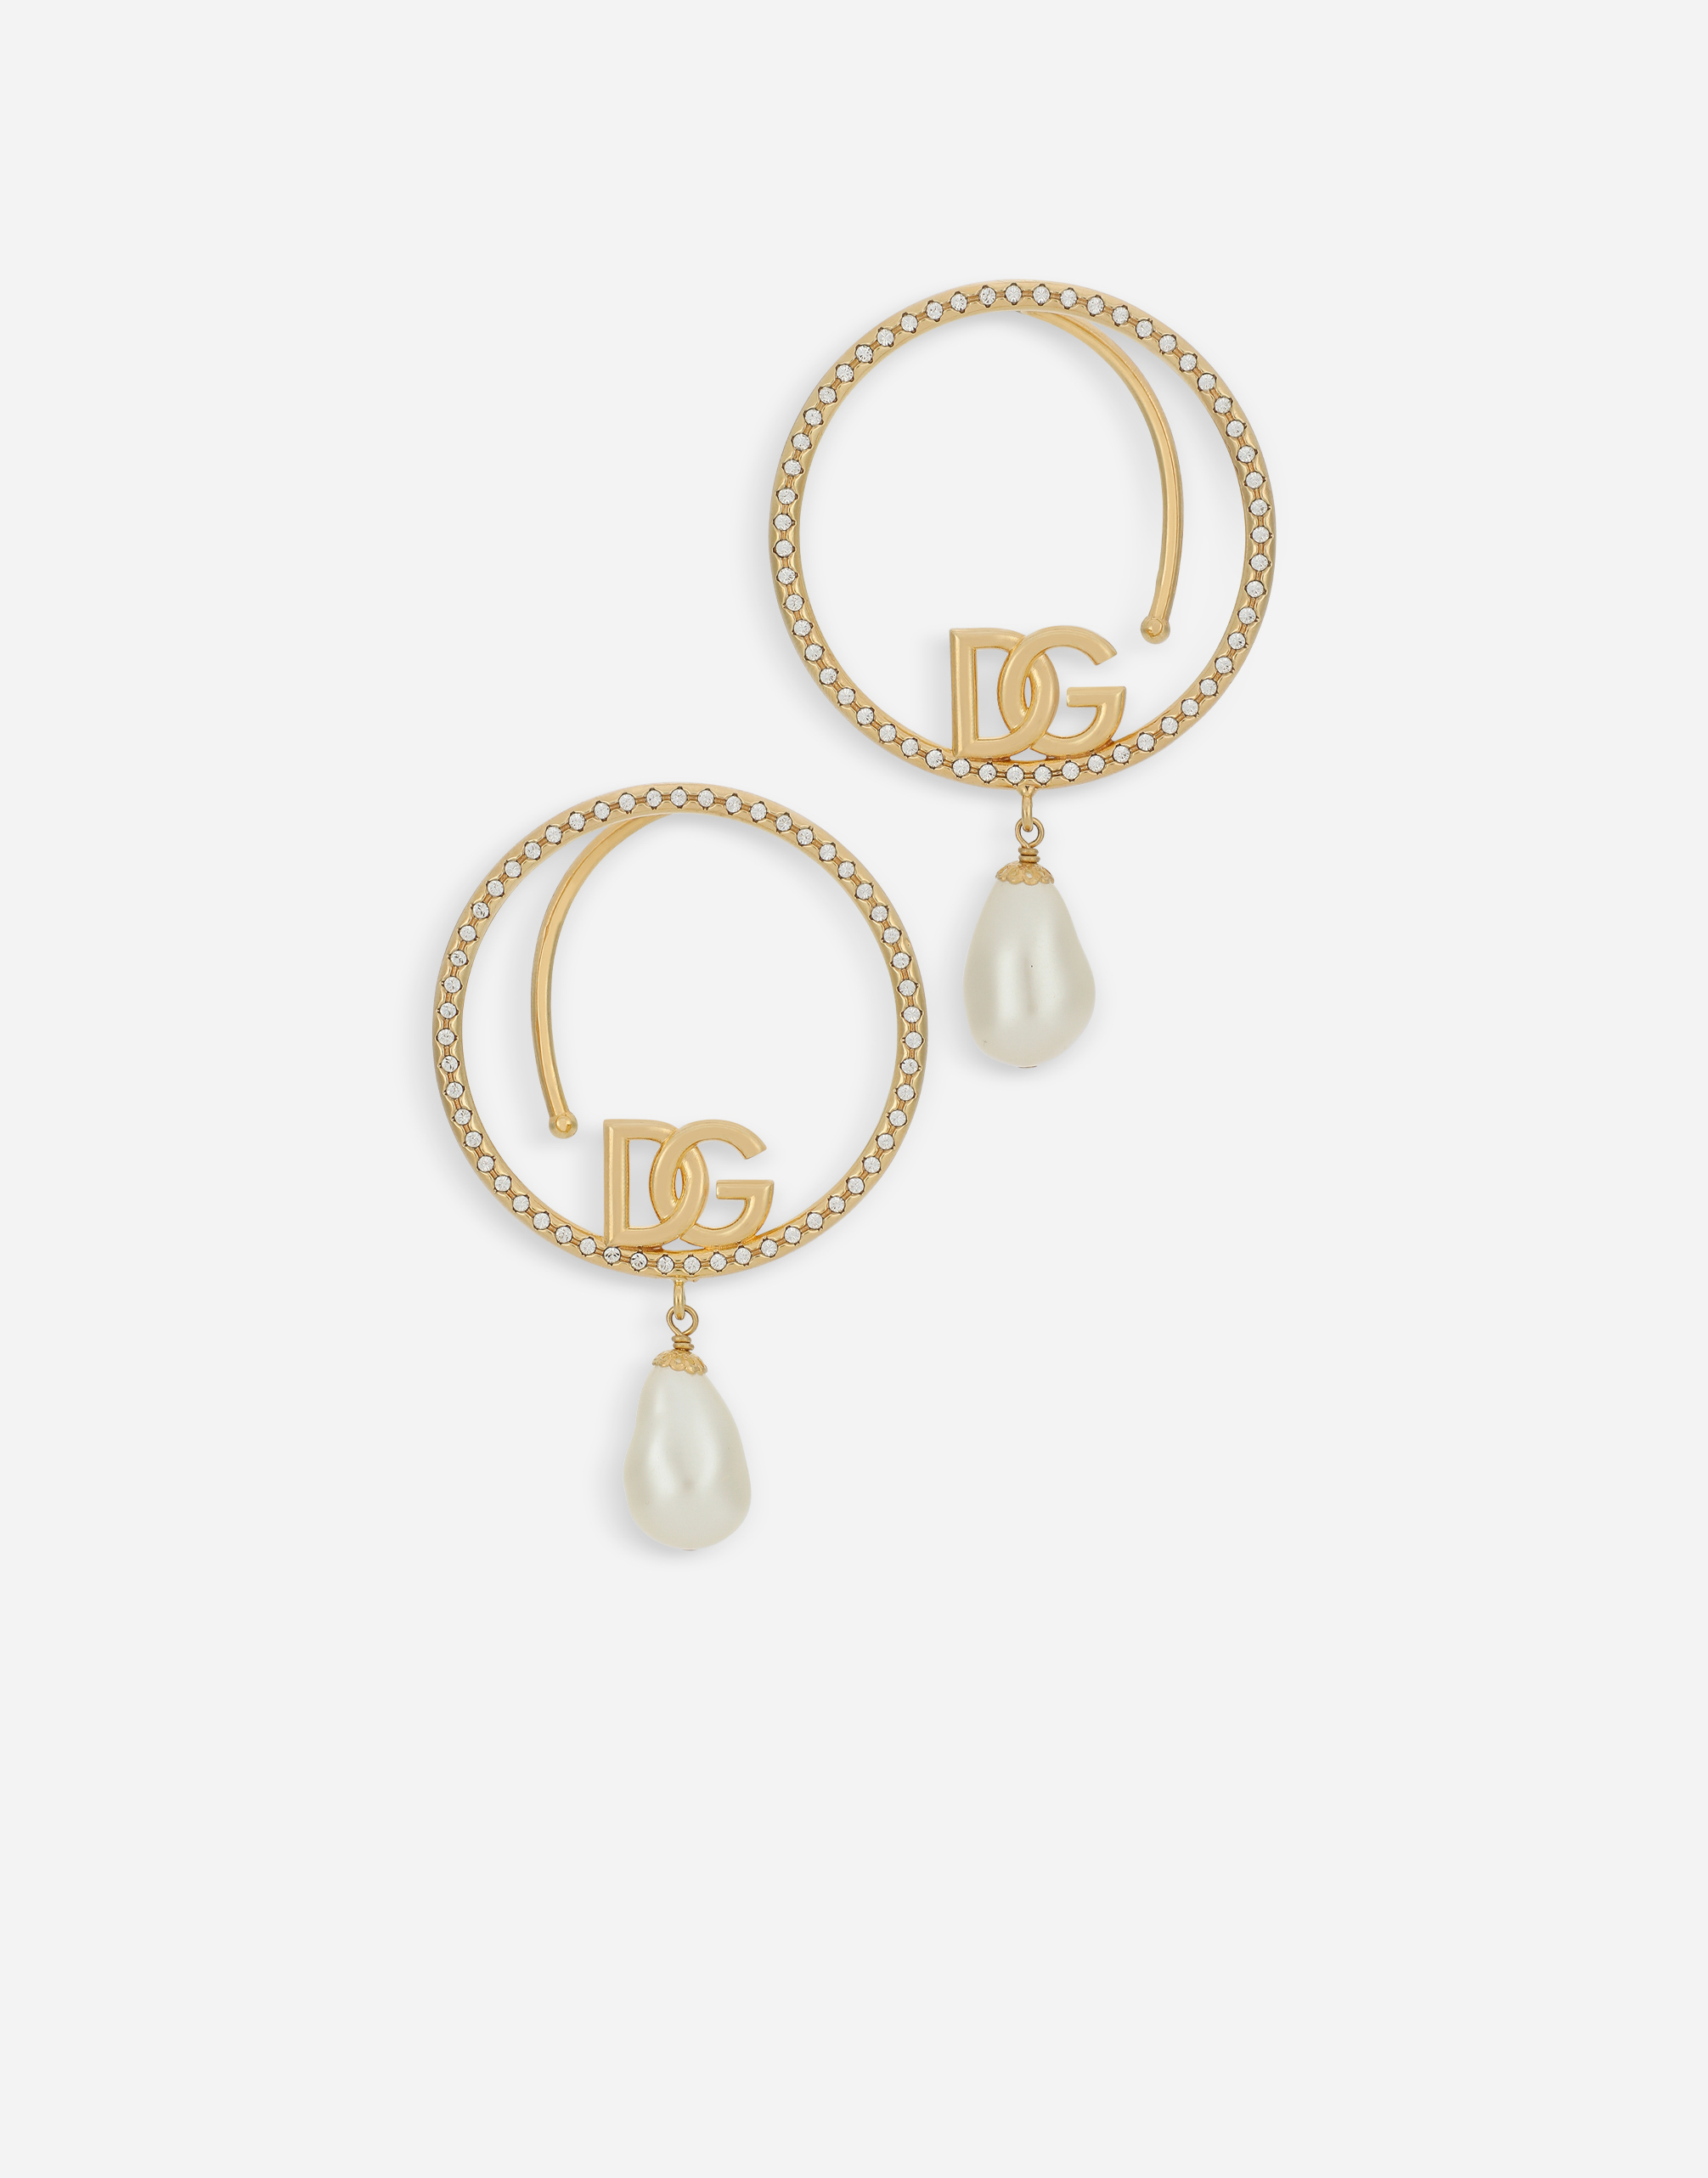 Hoop earrings with DG logo and pearls in Gold